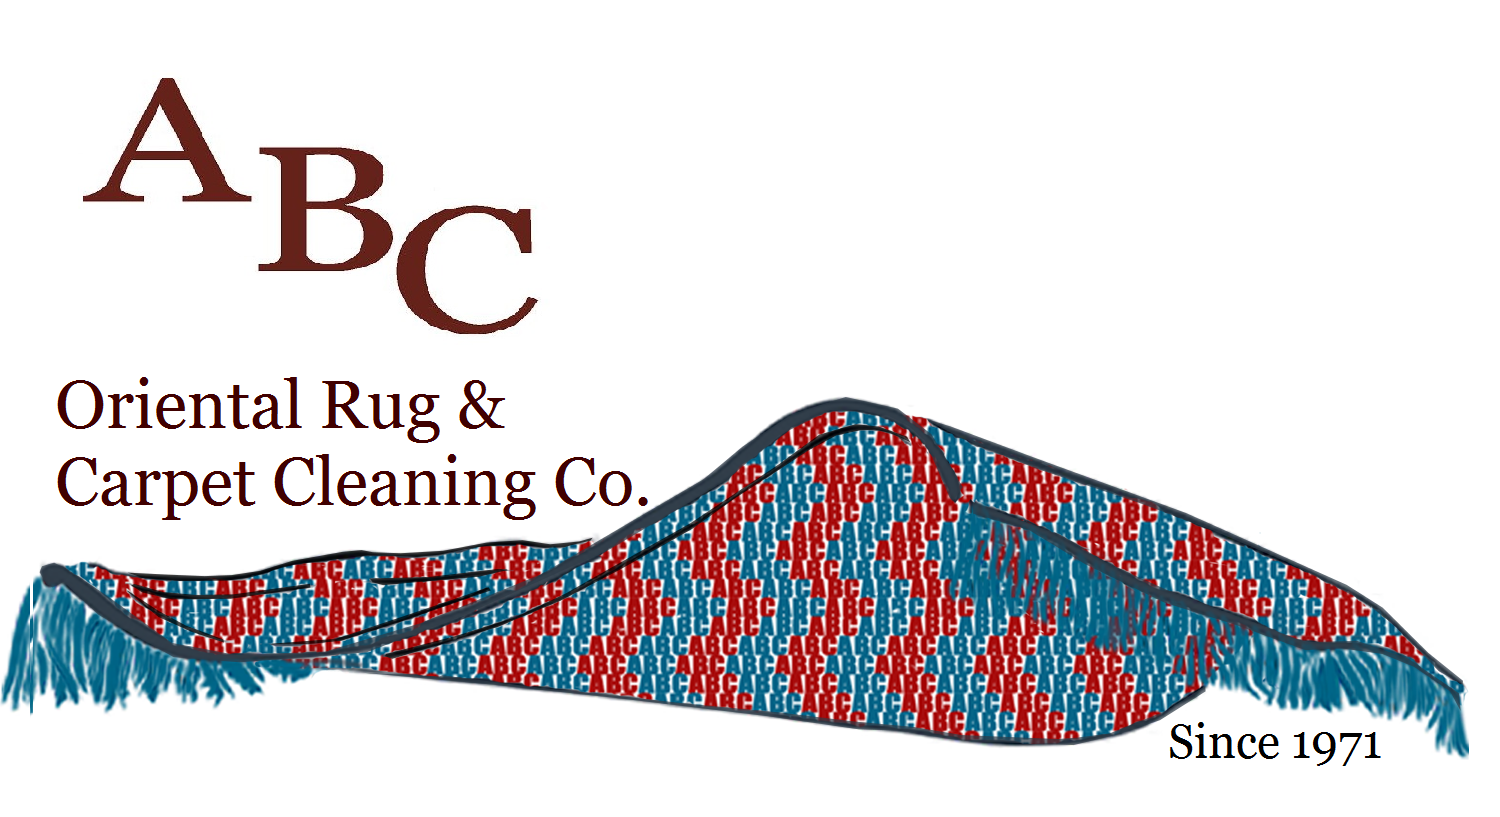 ABC Oriental Rug & Carpet Cleaning Co. Logo/Photo